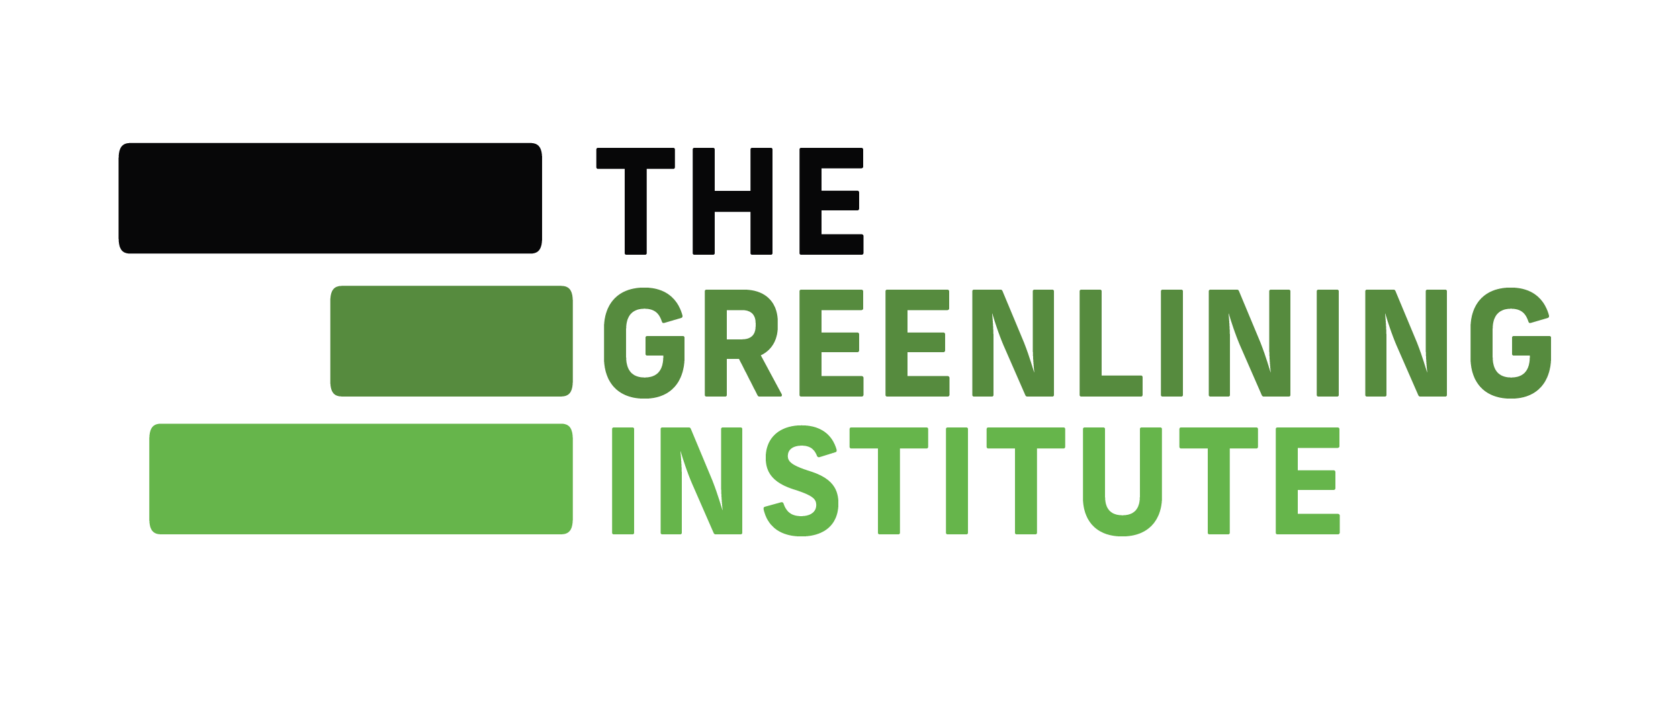 greenlining logo